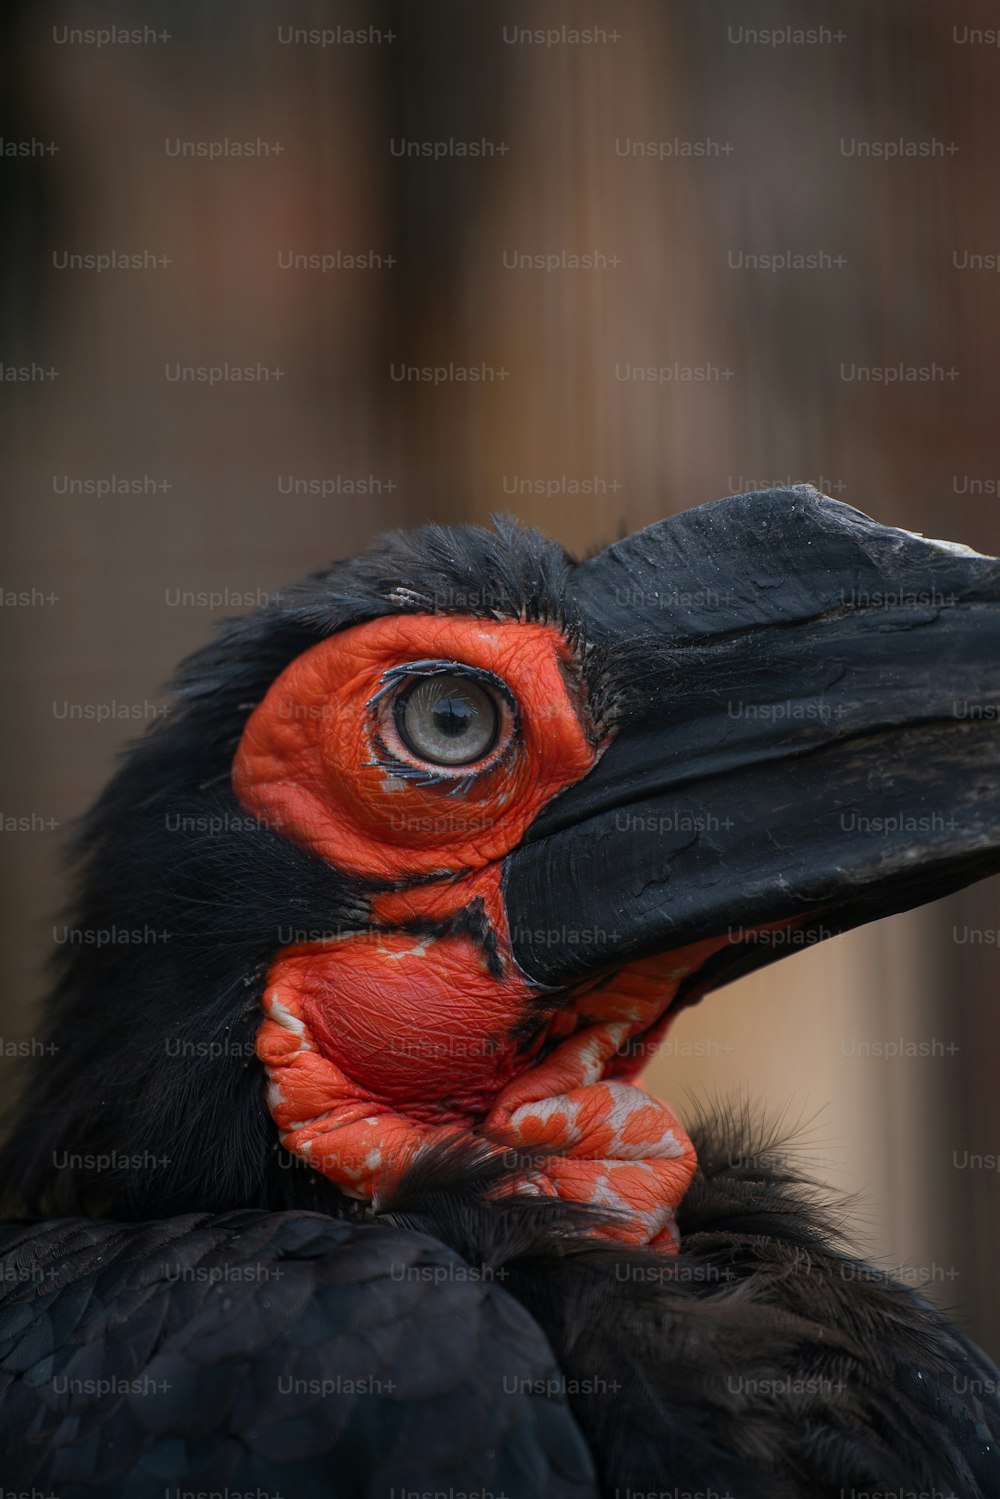 a close up of a black and orange bird